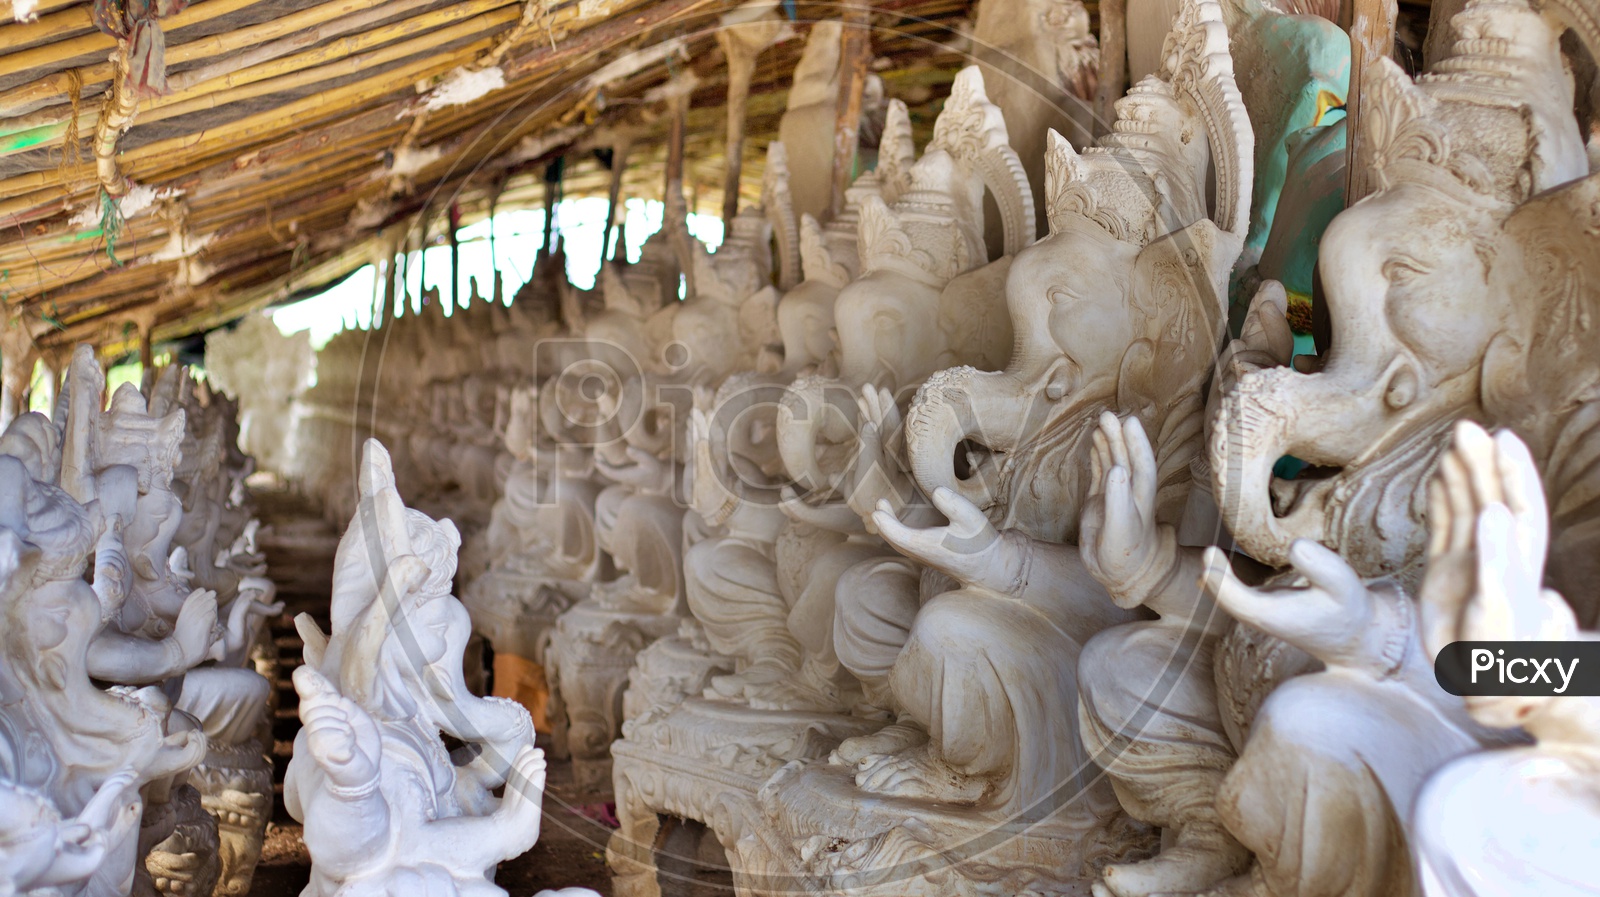 Vinayaka statues made of plaster of paris.